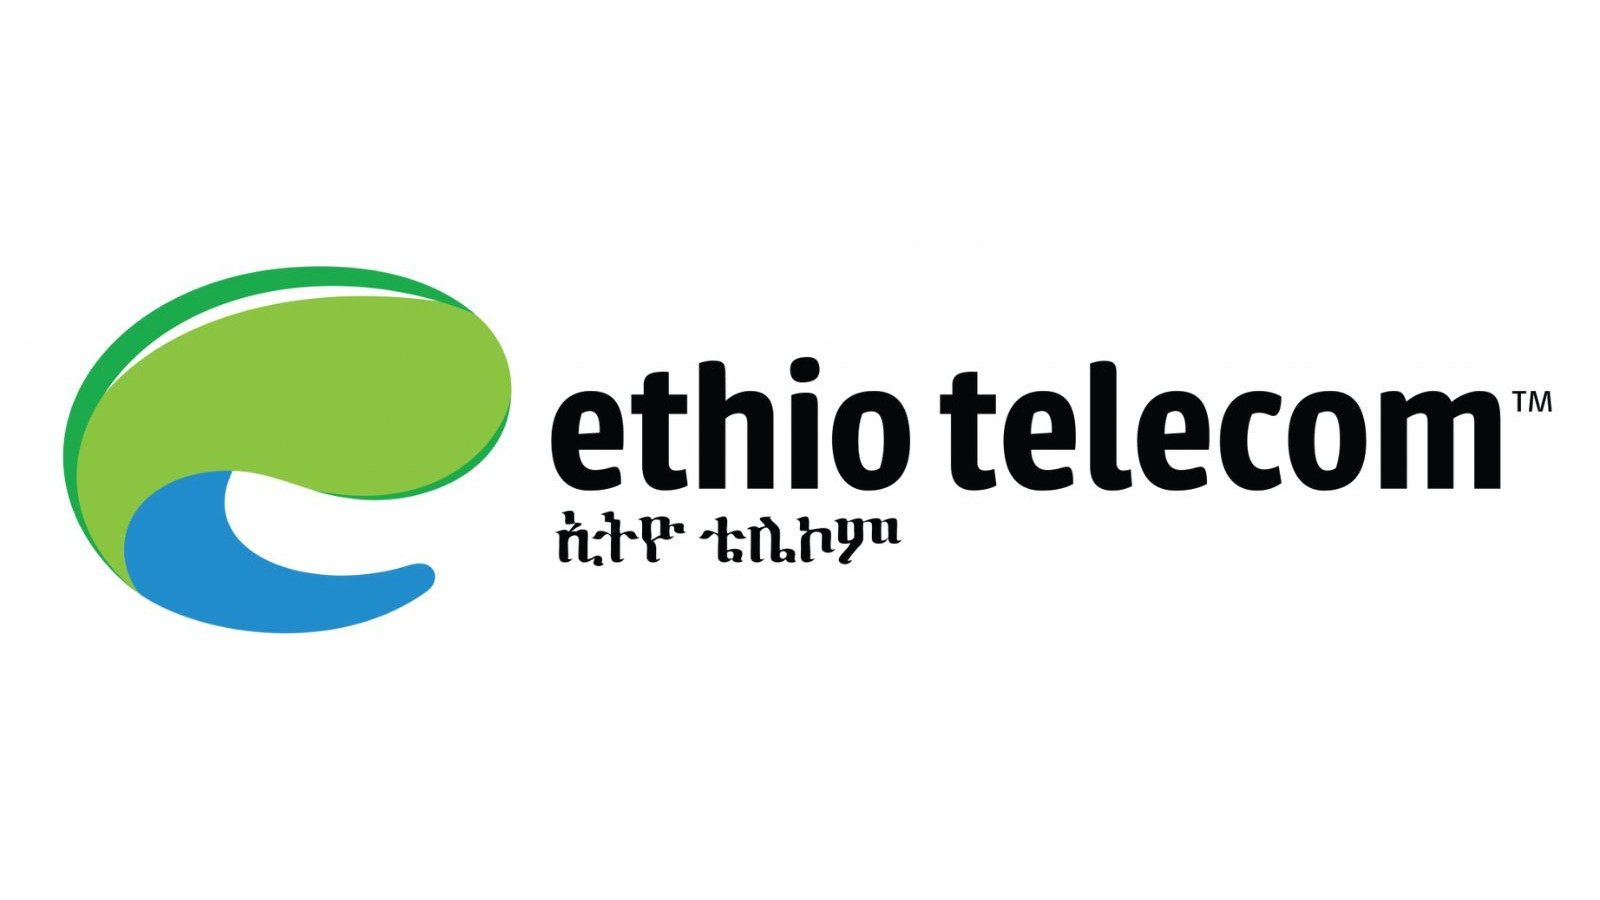 Ethiotelecom 7 ETB Mobile Top-up ET 0.71 $